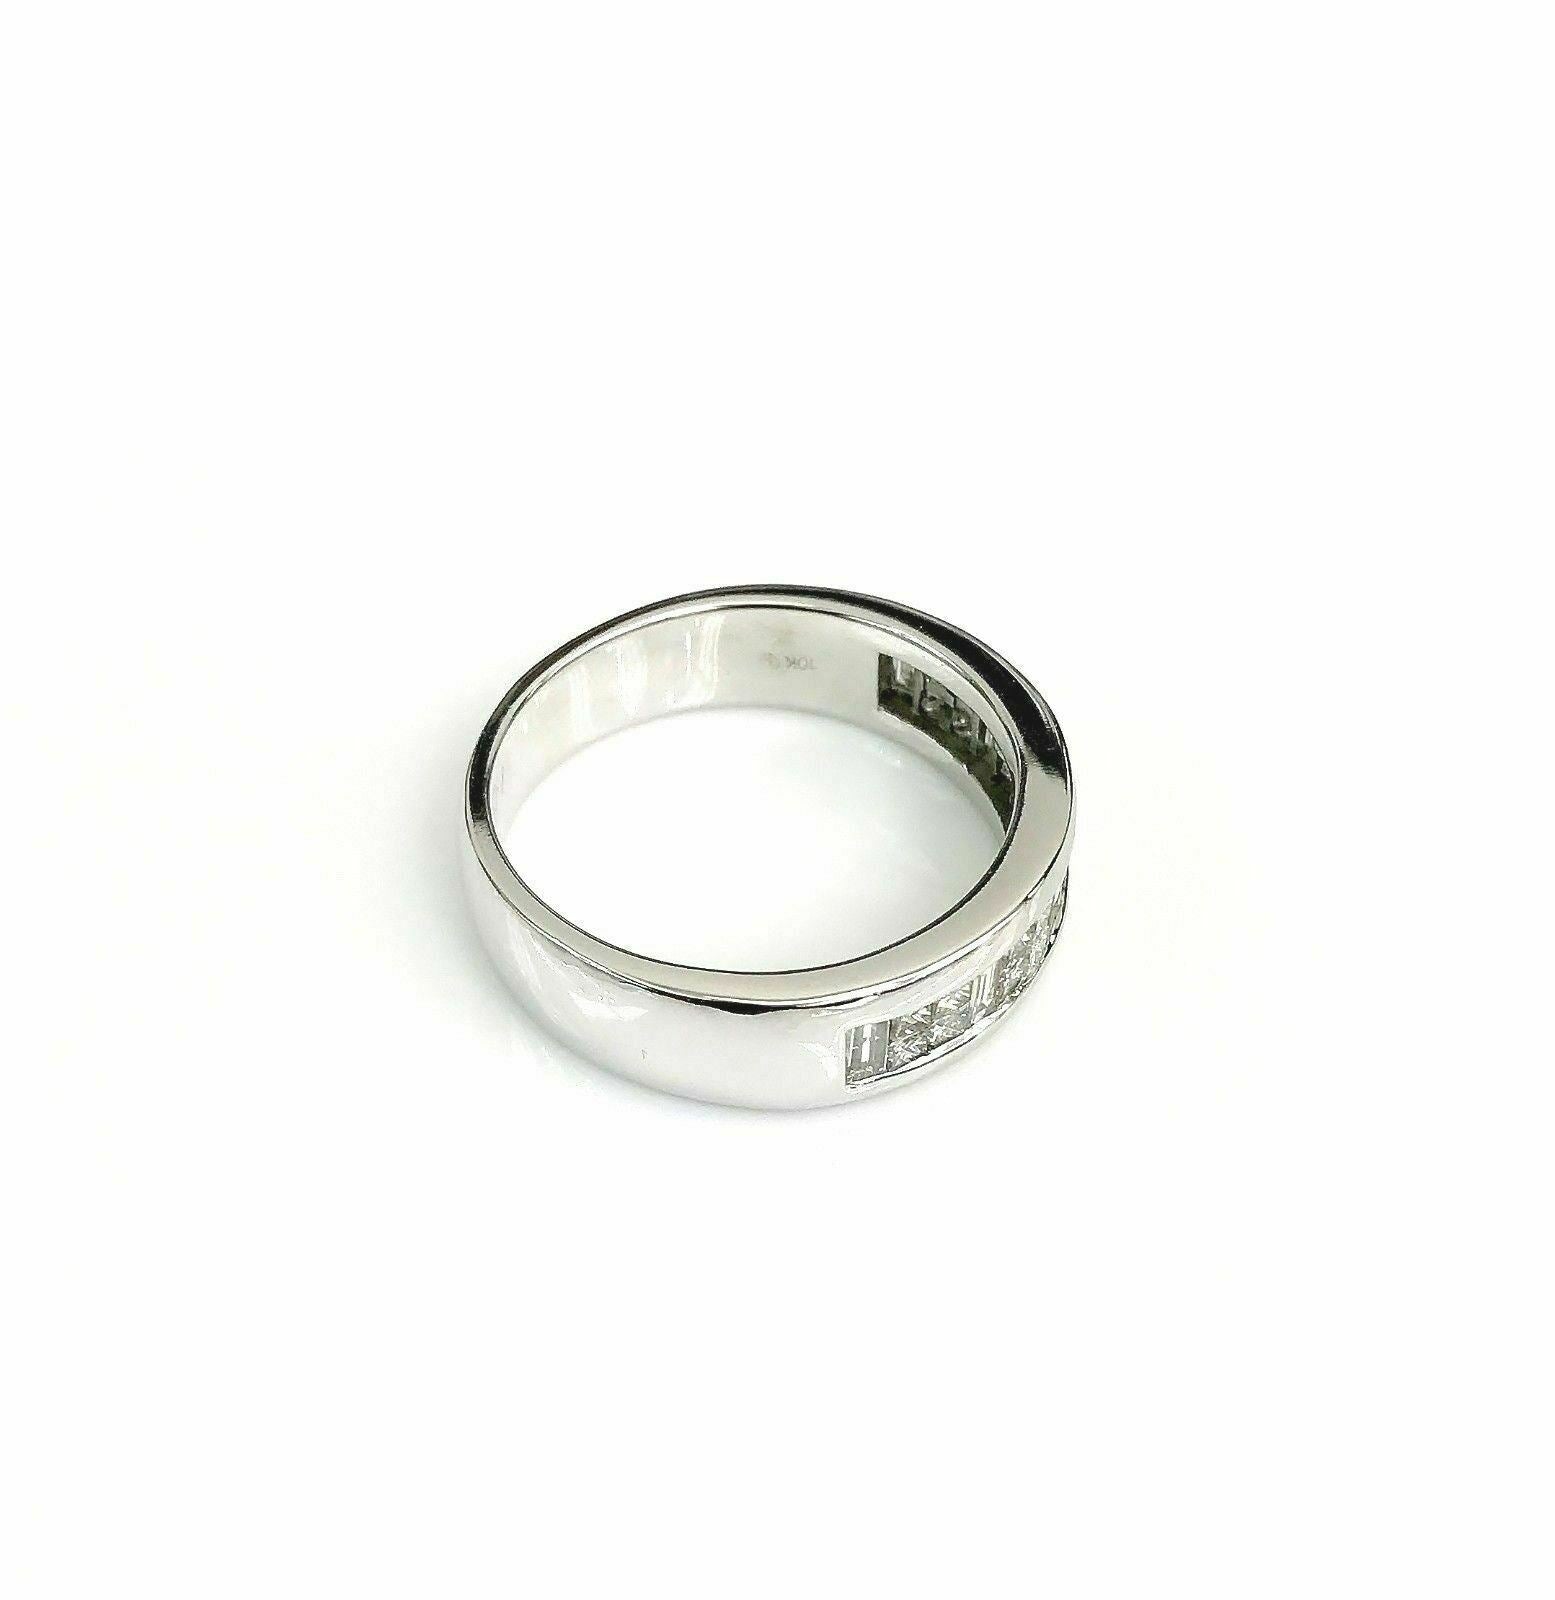 $4,250 Retail Men's Diamond Invisible Set Ring H -I SI Diamonds 10K White Gold